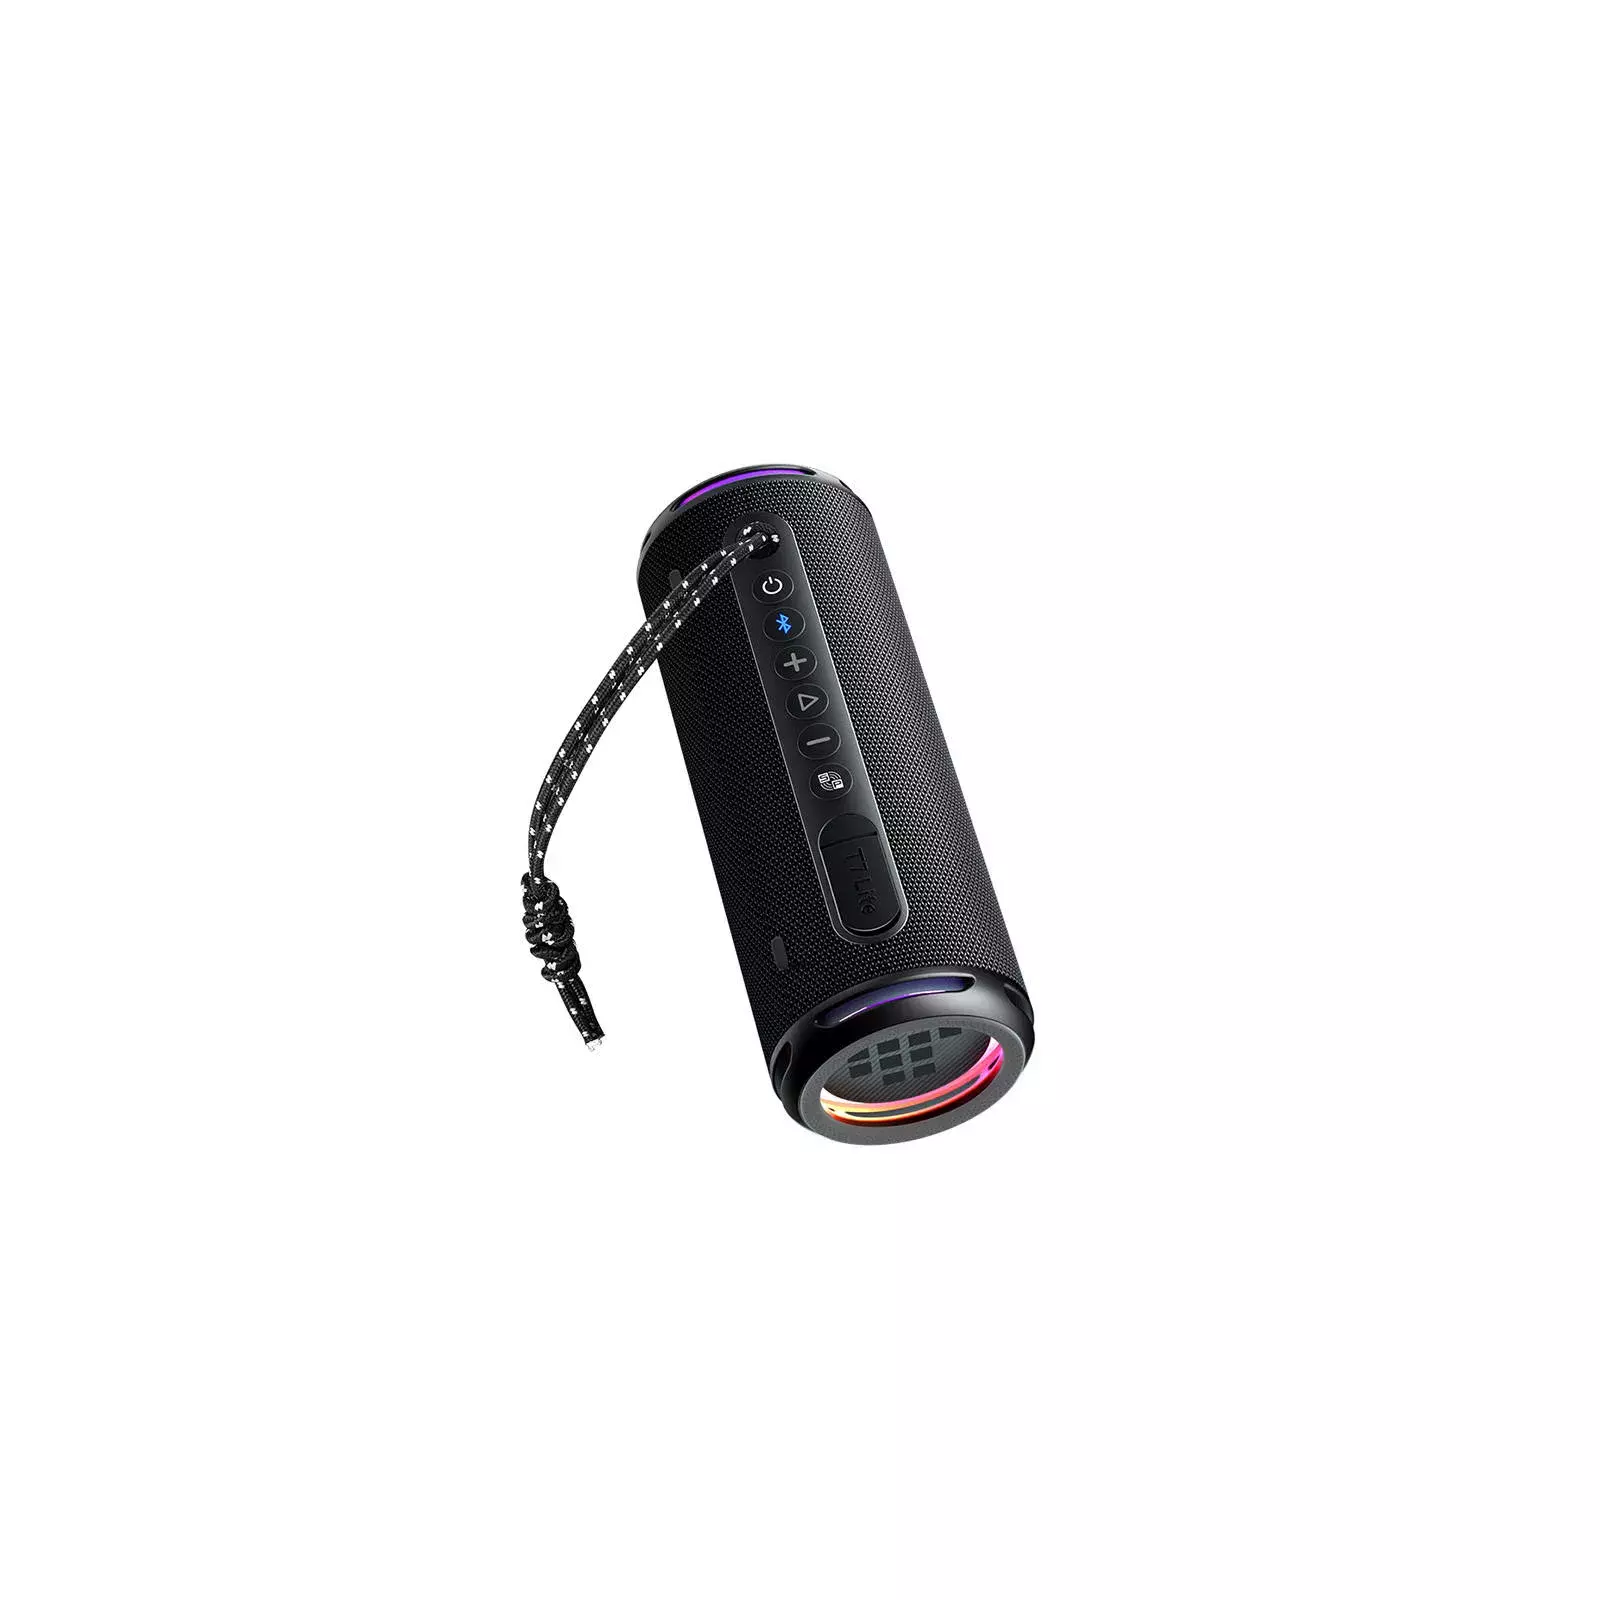 Tronsmart T7 Mini Bluetooth Speaker with Extra BASS - Black